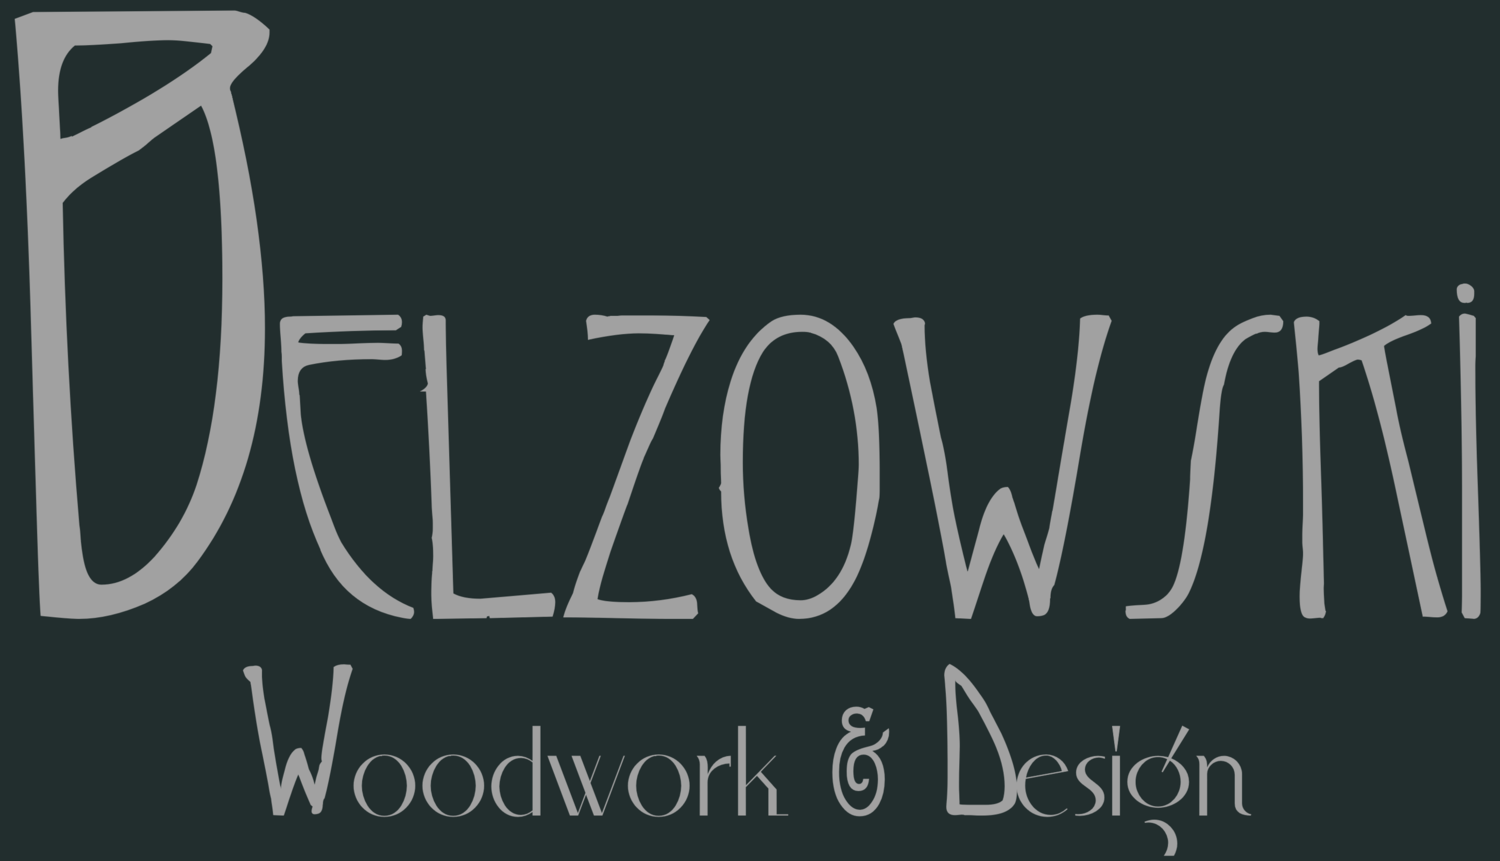 Belzowski Woodwork & Design